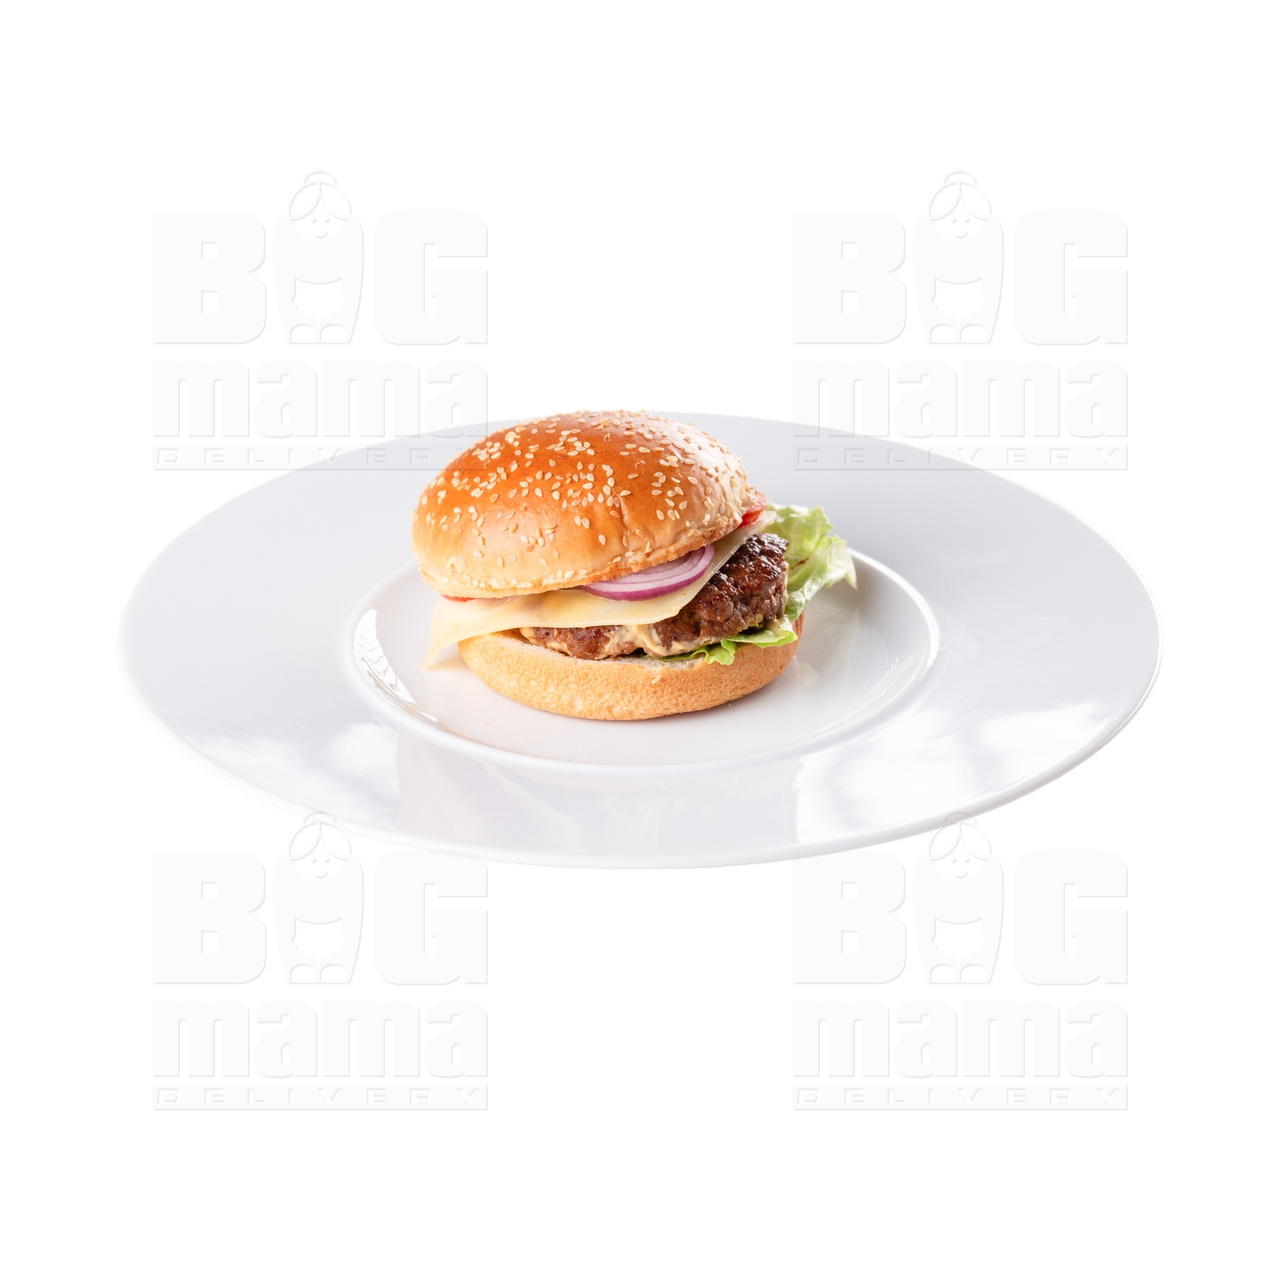 Product #267 image - Miccs burger